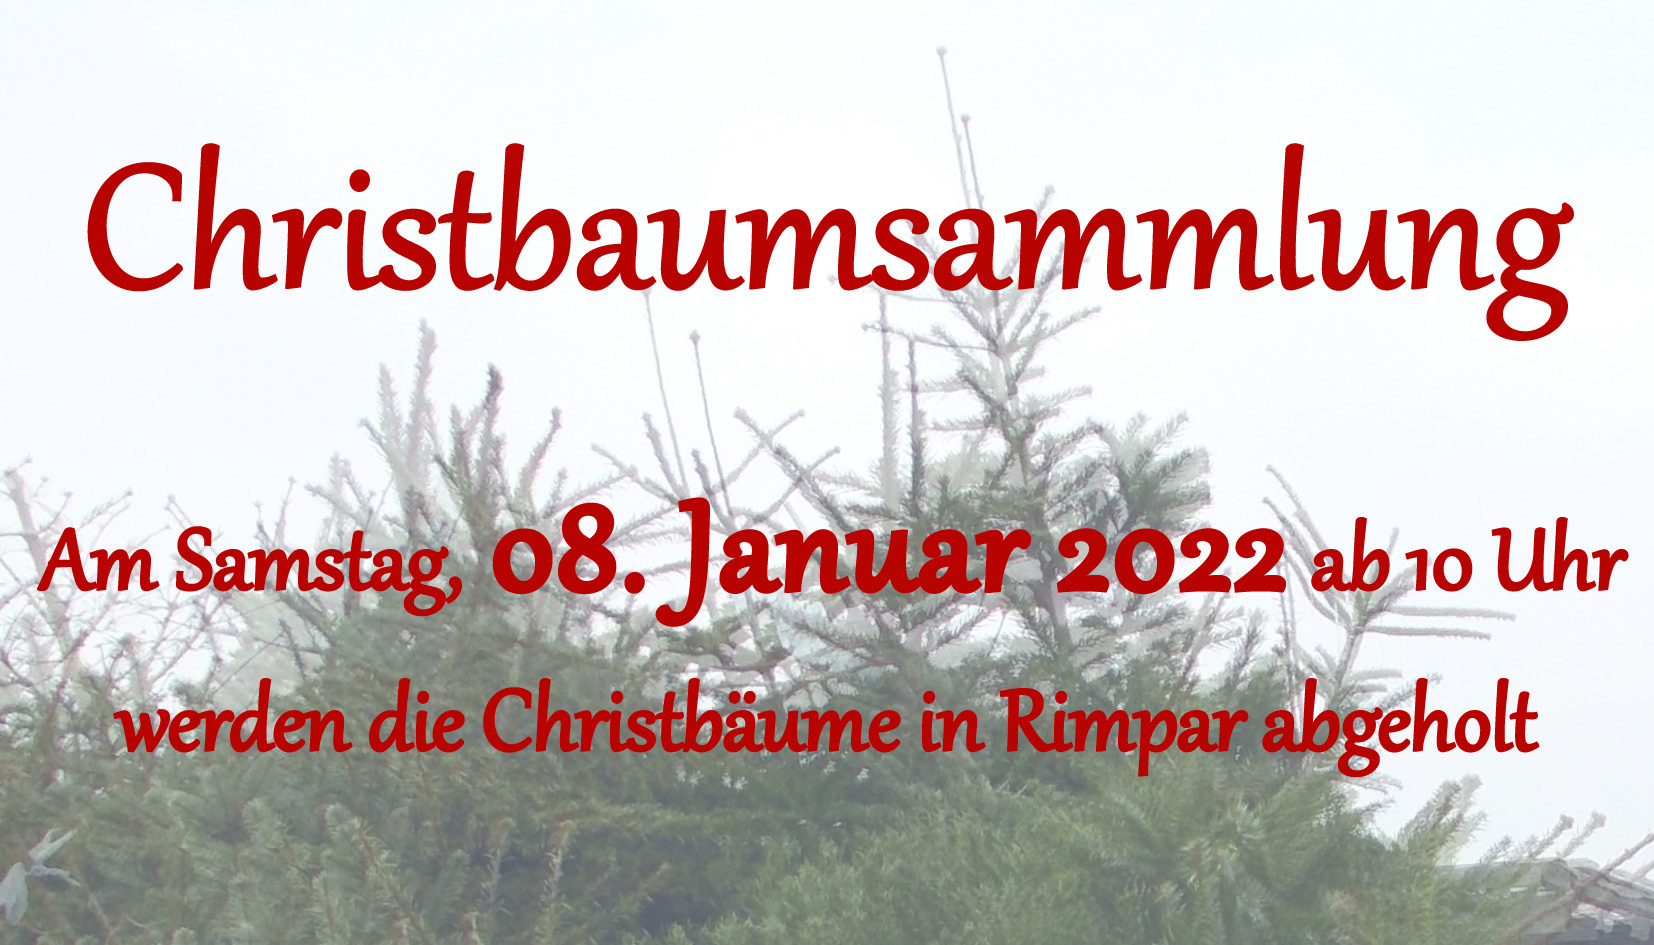 Christbaumsammlung am 08. Januar 2022 im Rimpar